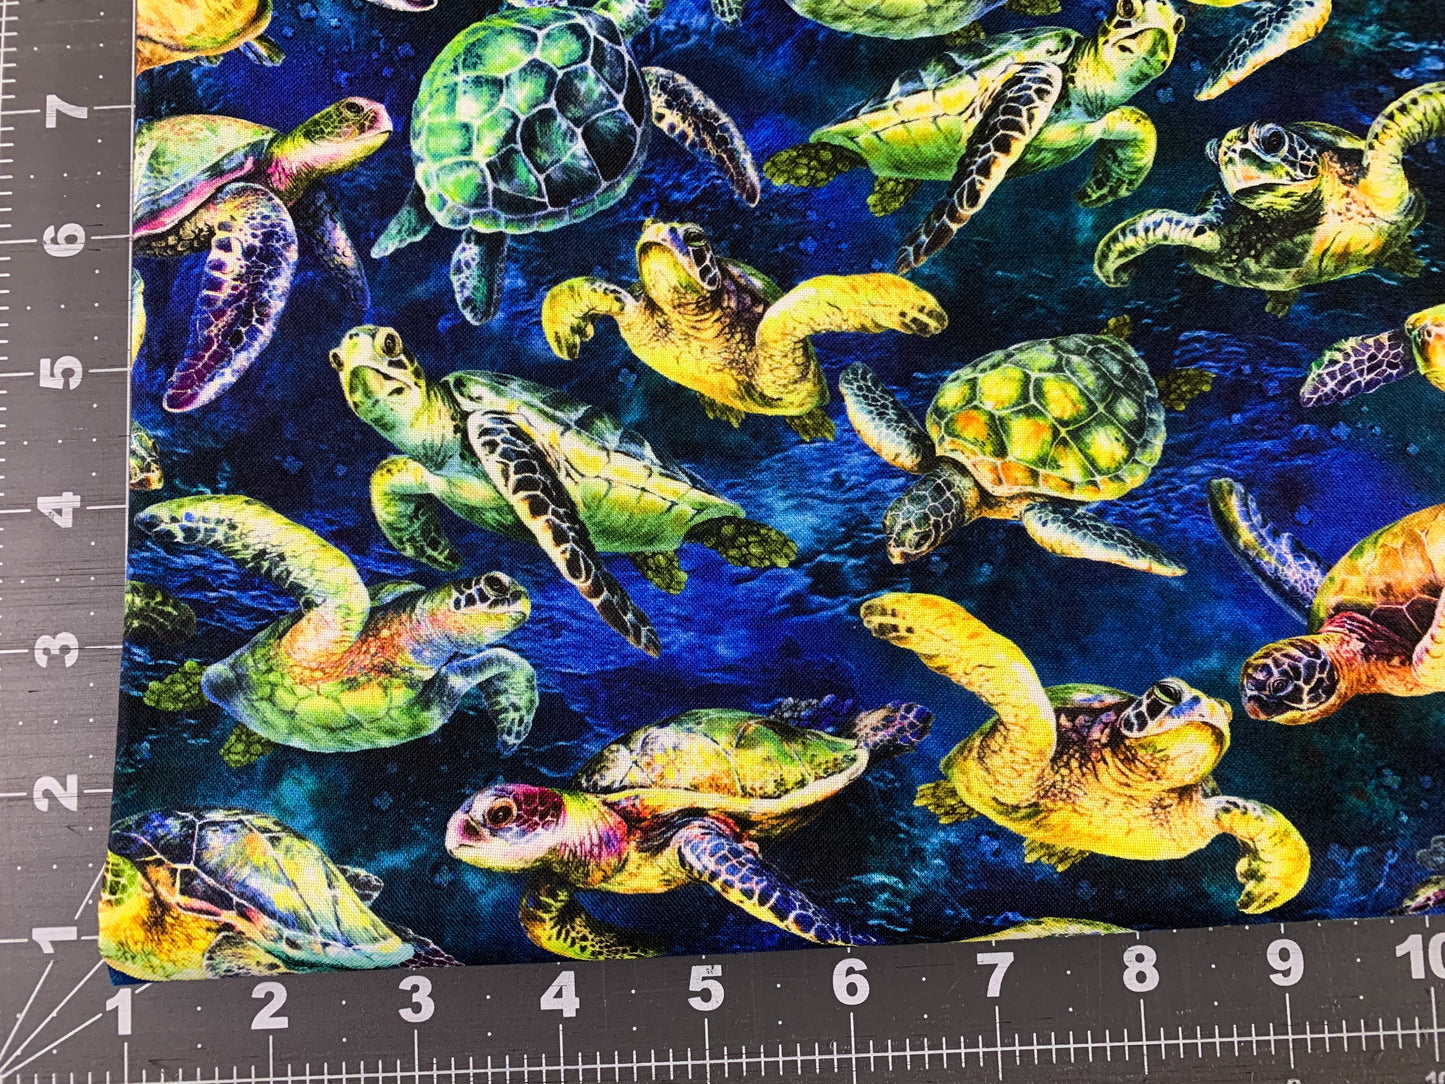 Dark Blue Sea Turtle fabric 59-3851 Sea cotton fabric